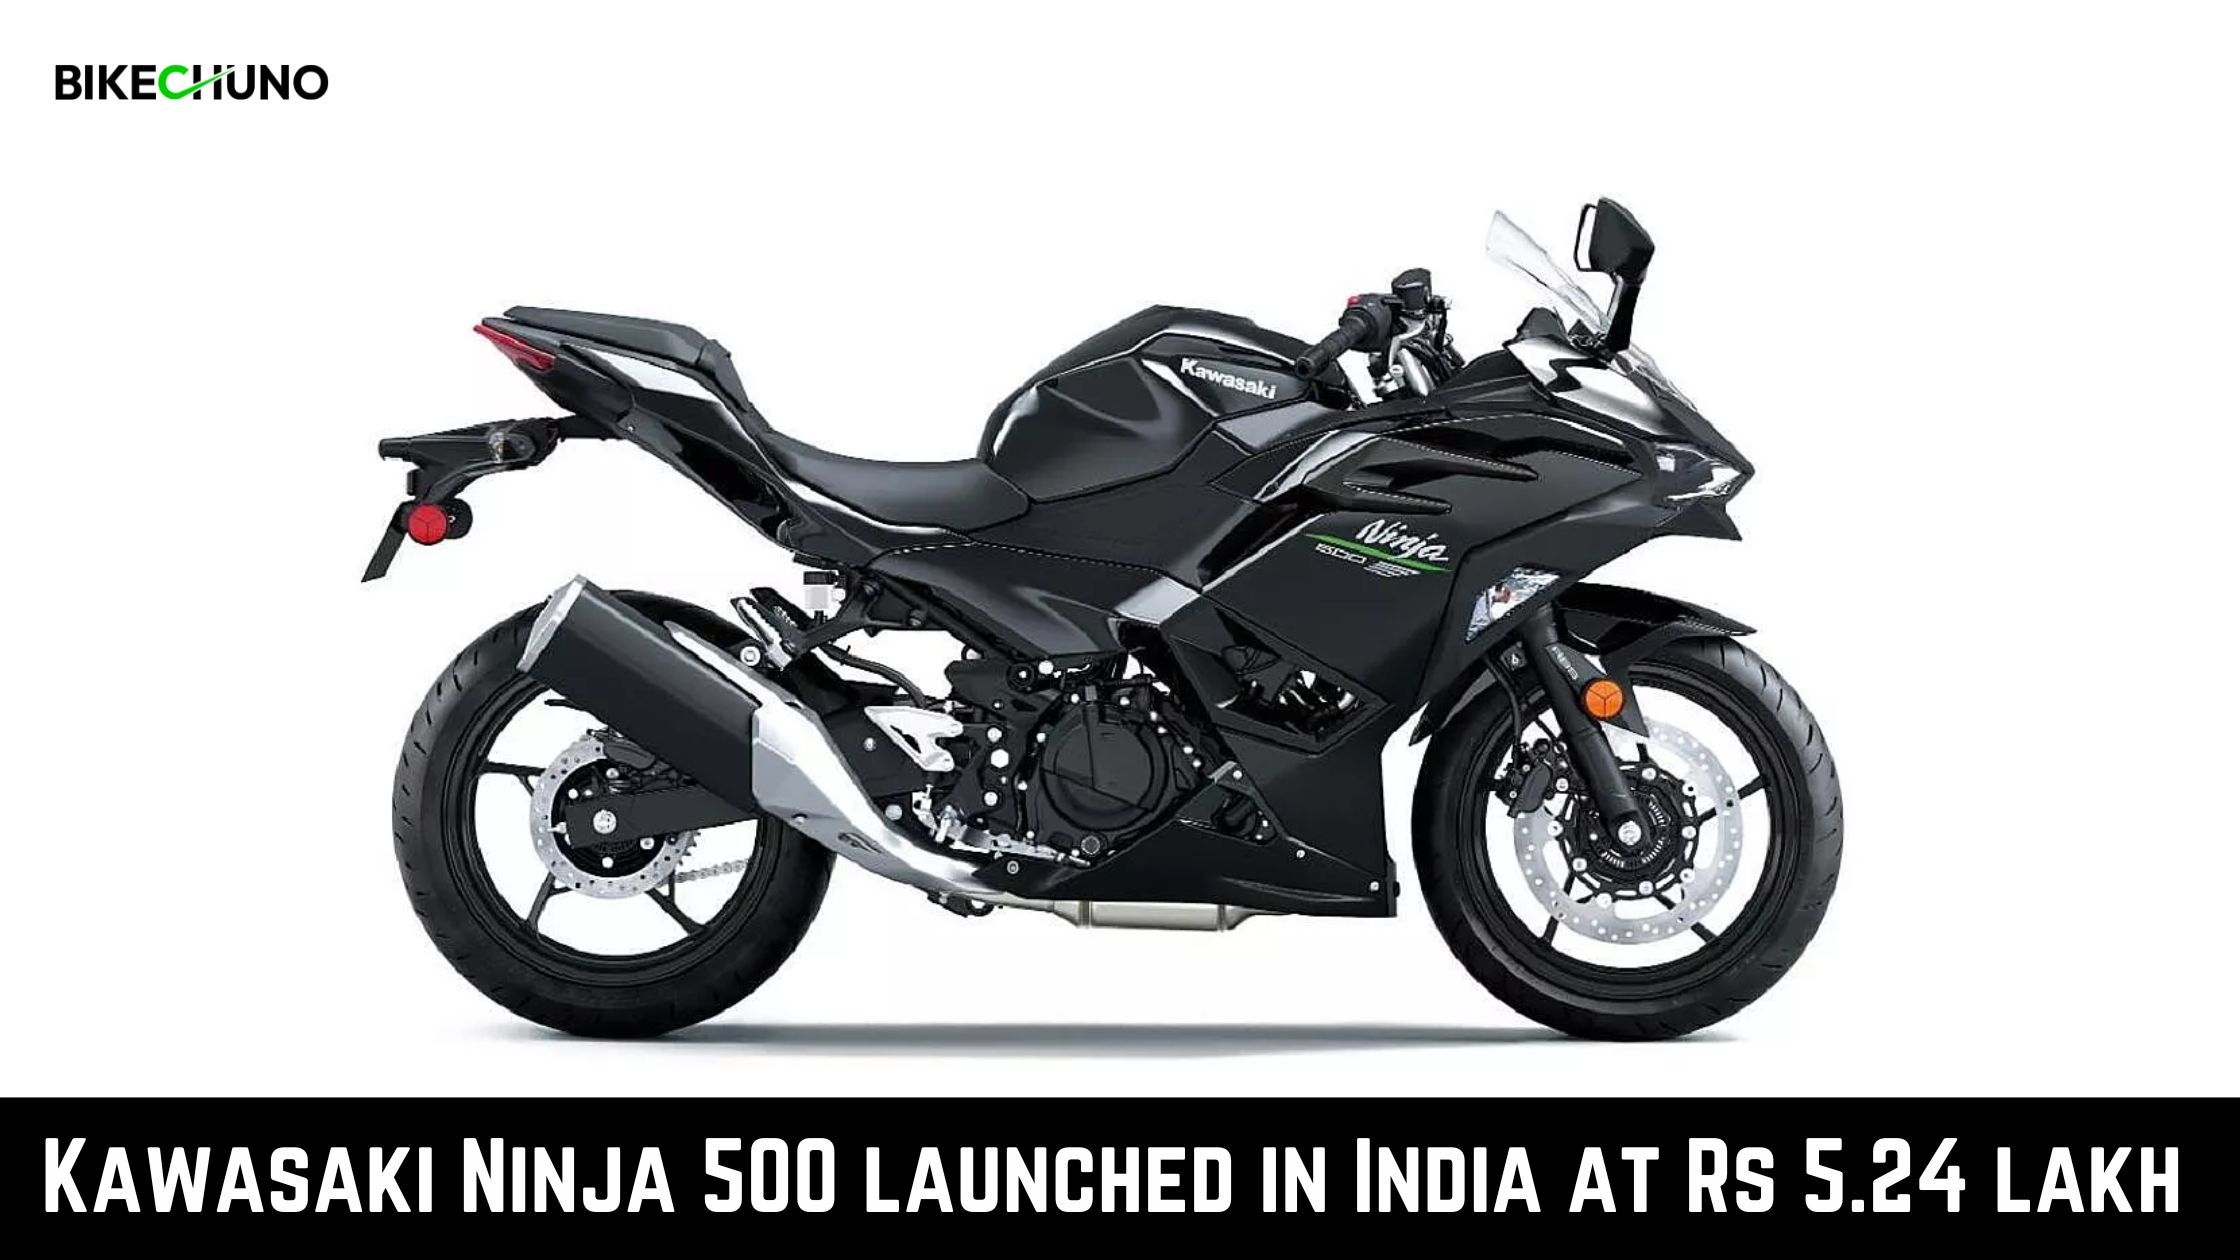 Kawasaki Ninja 500 launched in India